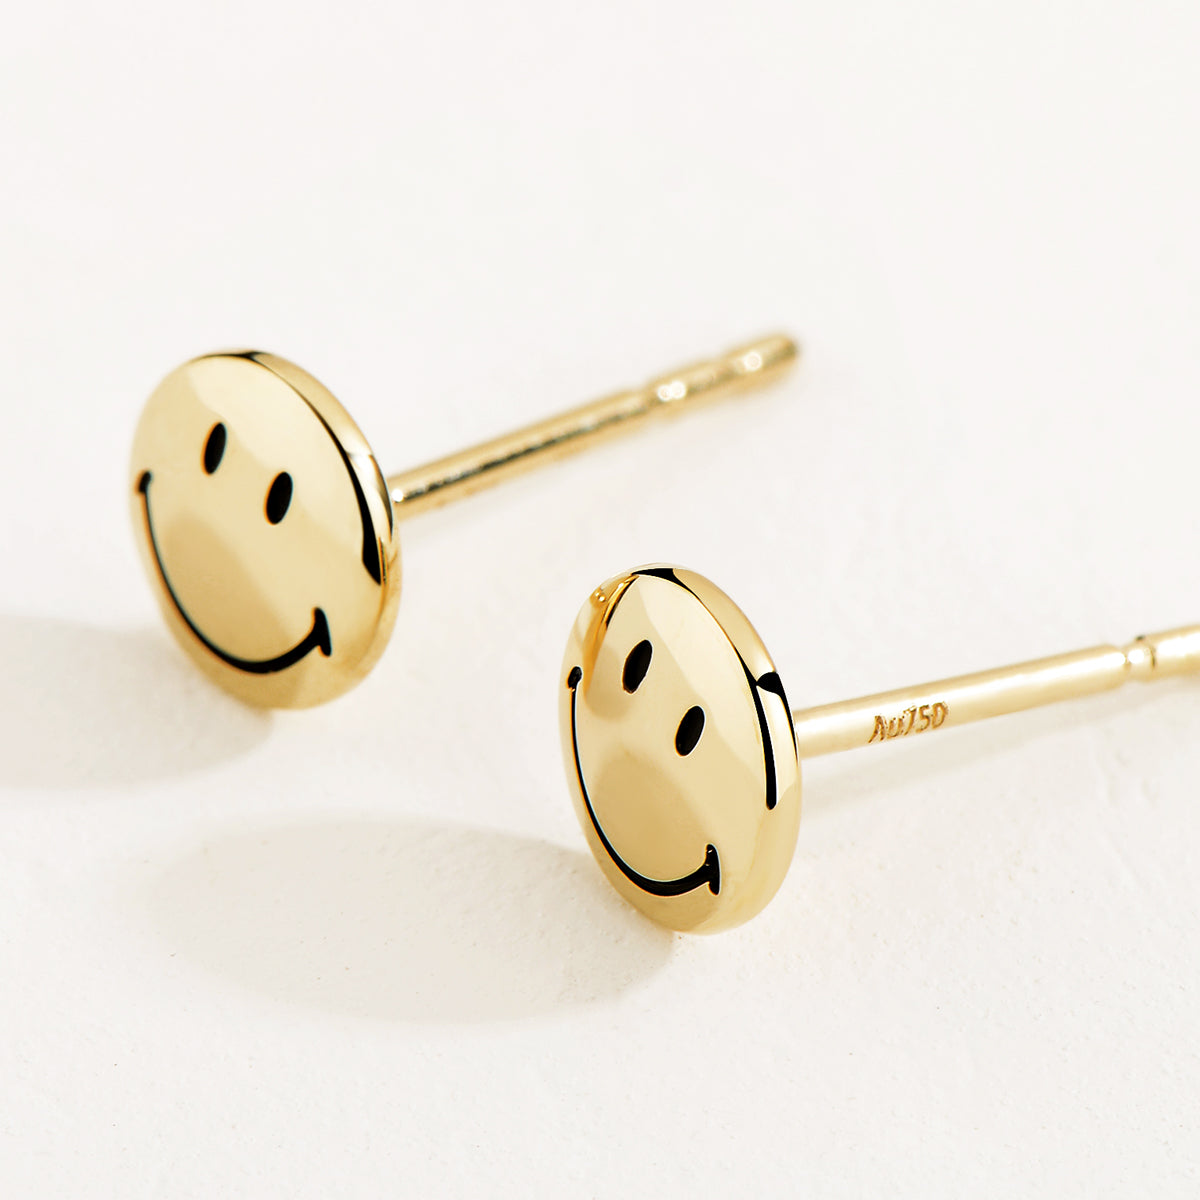 KKLUExSMILEY® Smiley Companion Gold Earrings